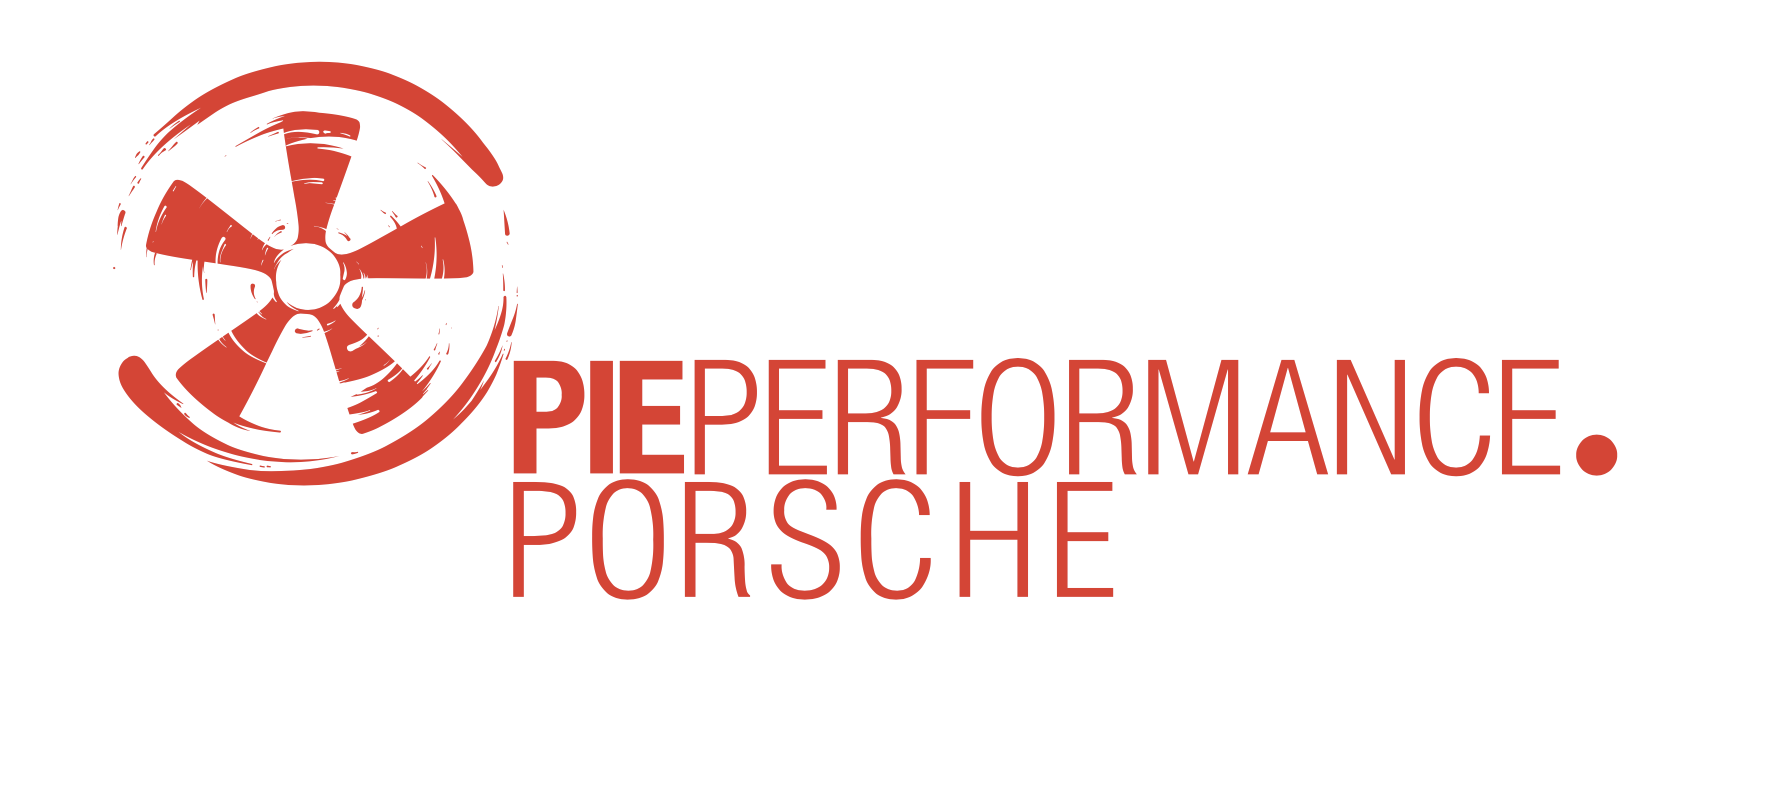 Pie performance logo